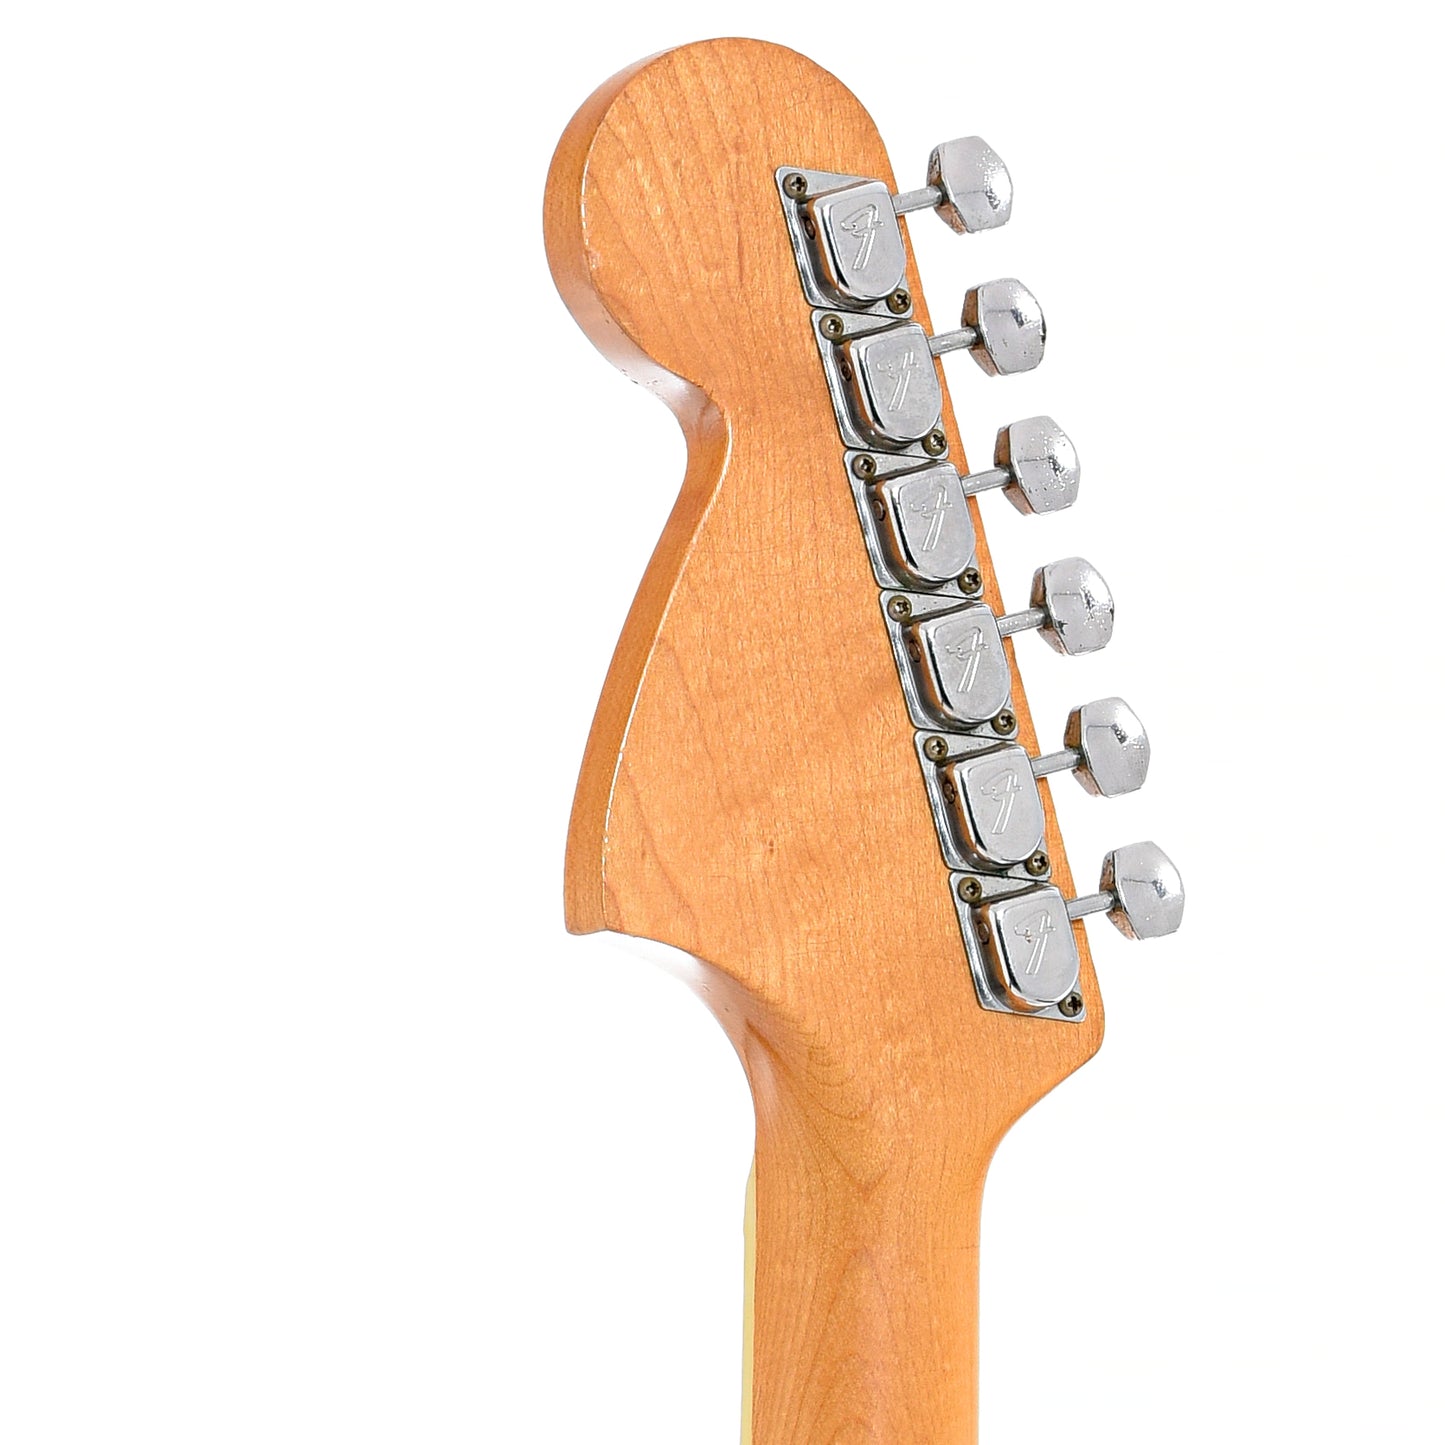 Back headstock of Fender Jaguar Electric Guitar (1967)